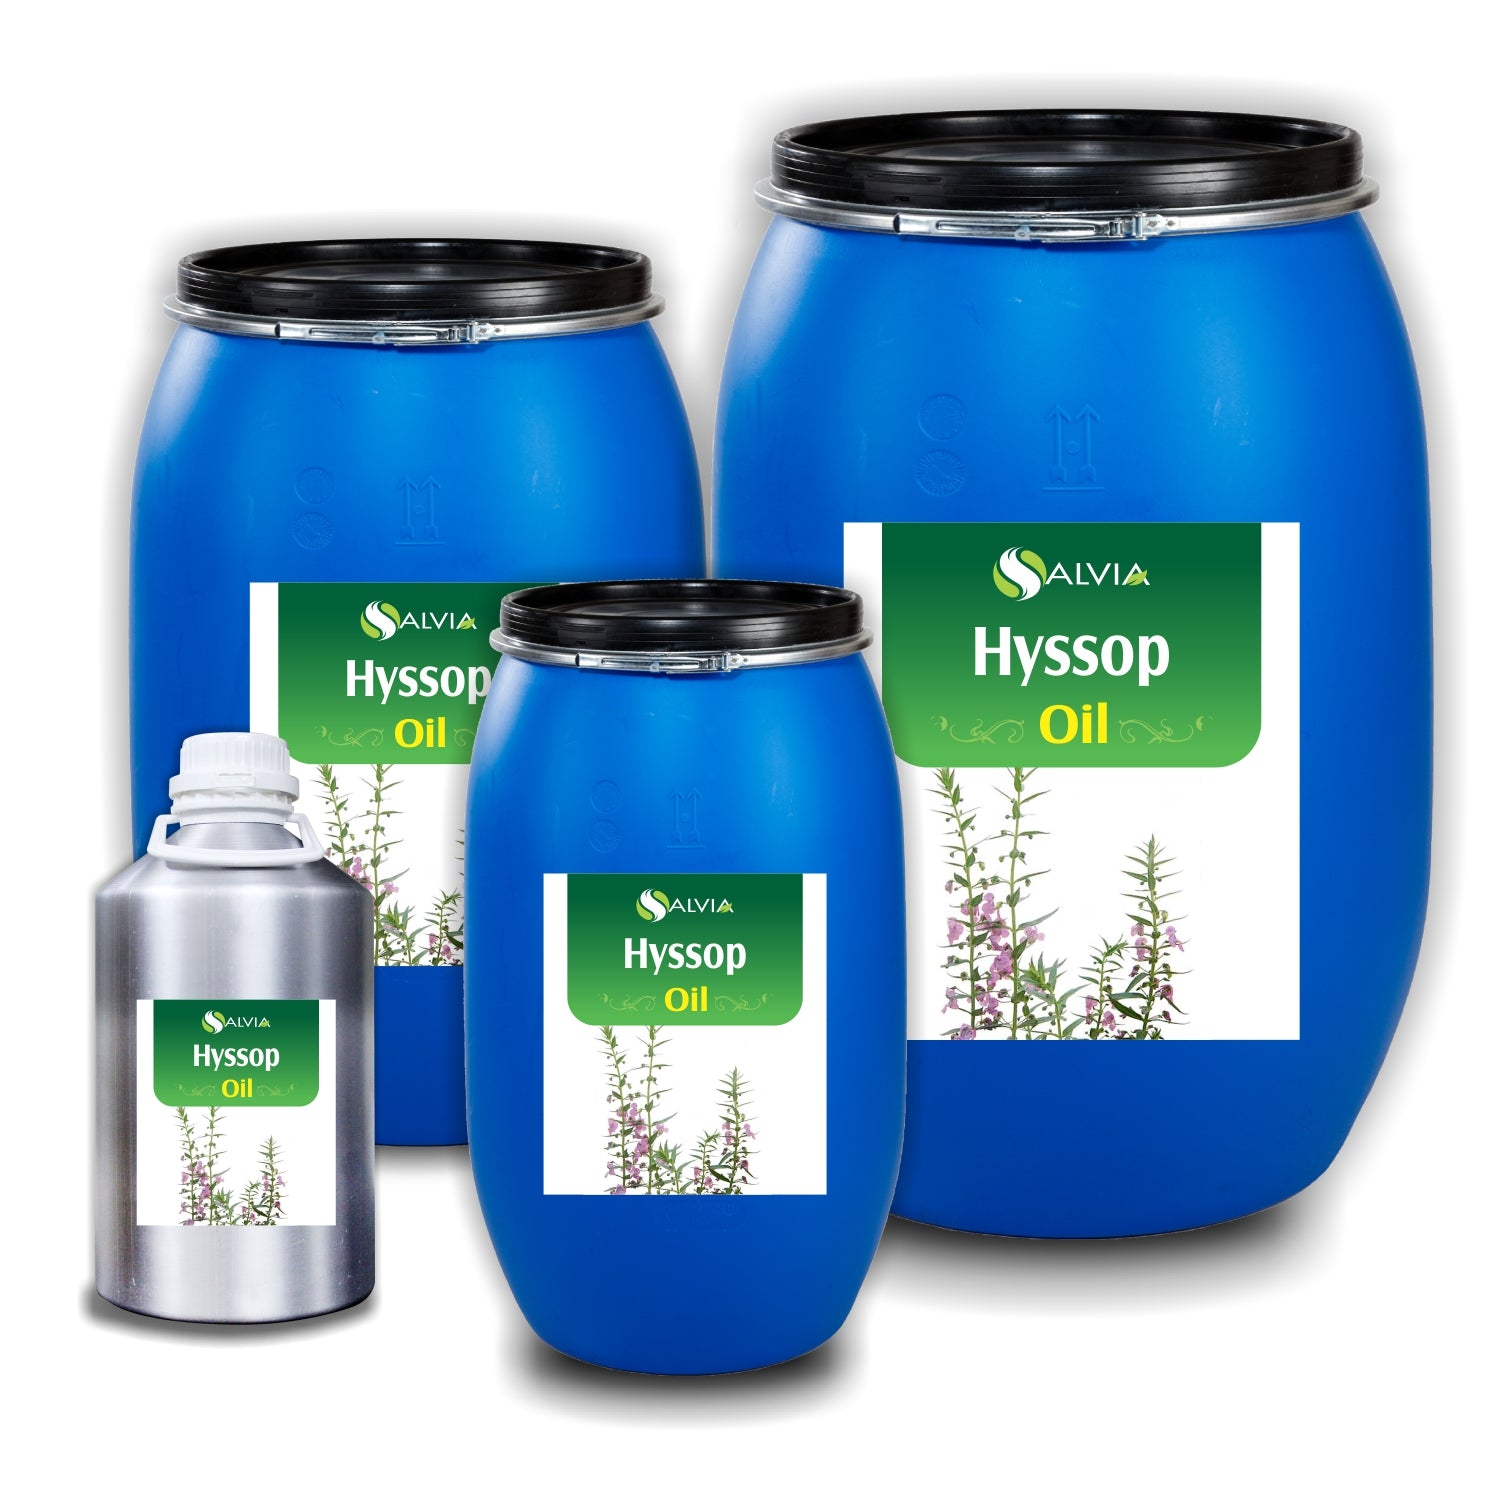 Salvia Natural Essential Oils 10kg Hyssop Oil (Hyssopus Officinalis) Pure Natural Essential Oil